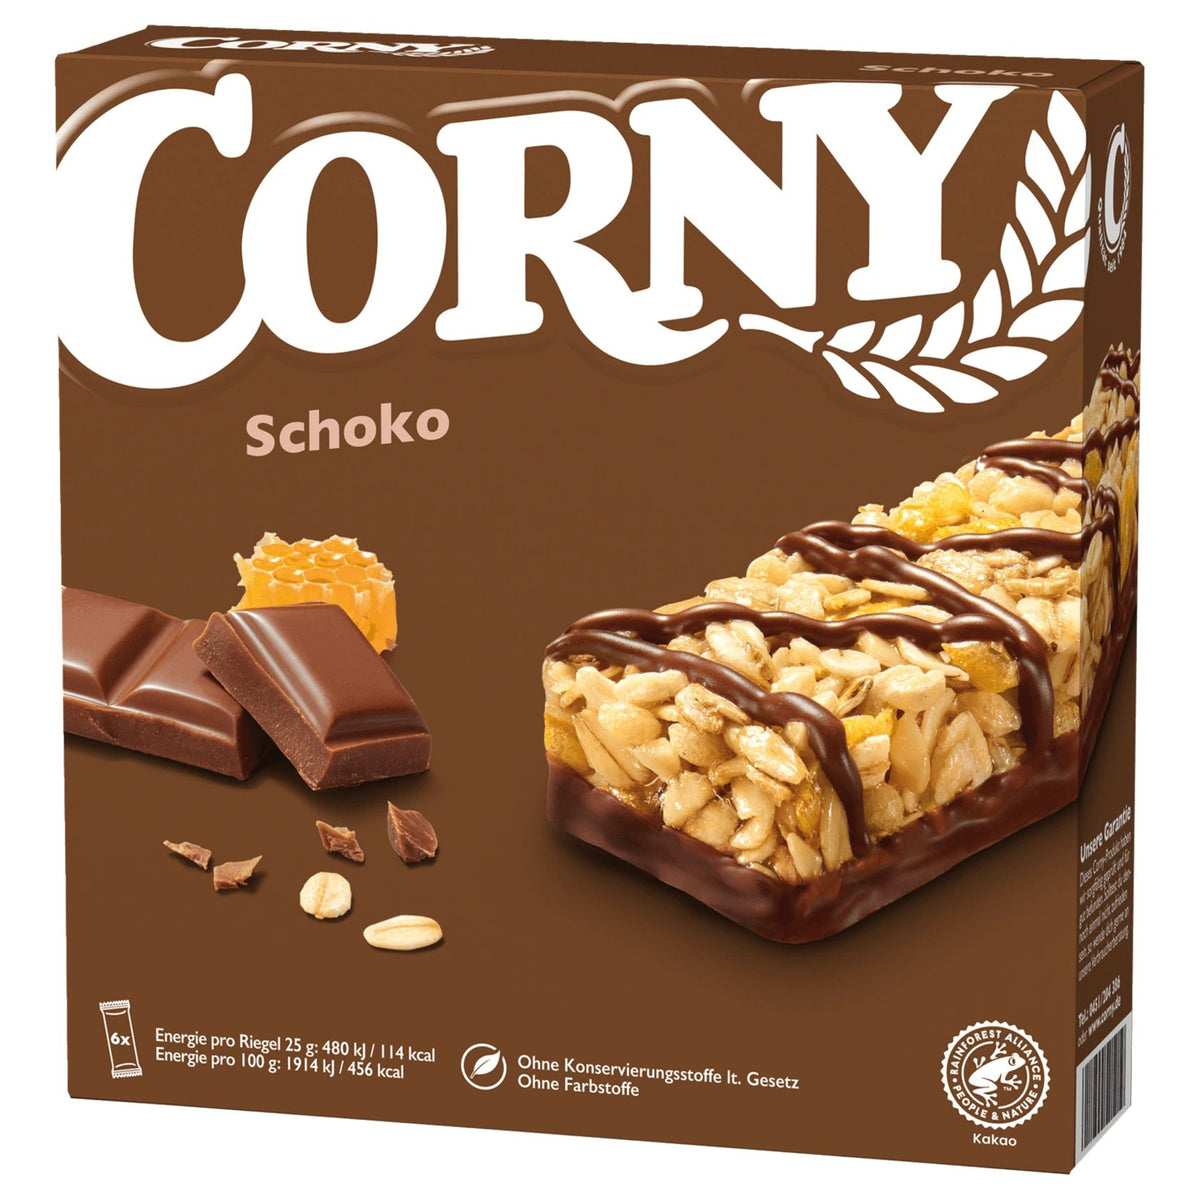 Corny Schoko 6x25g - küblerGo